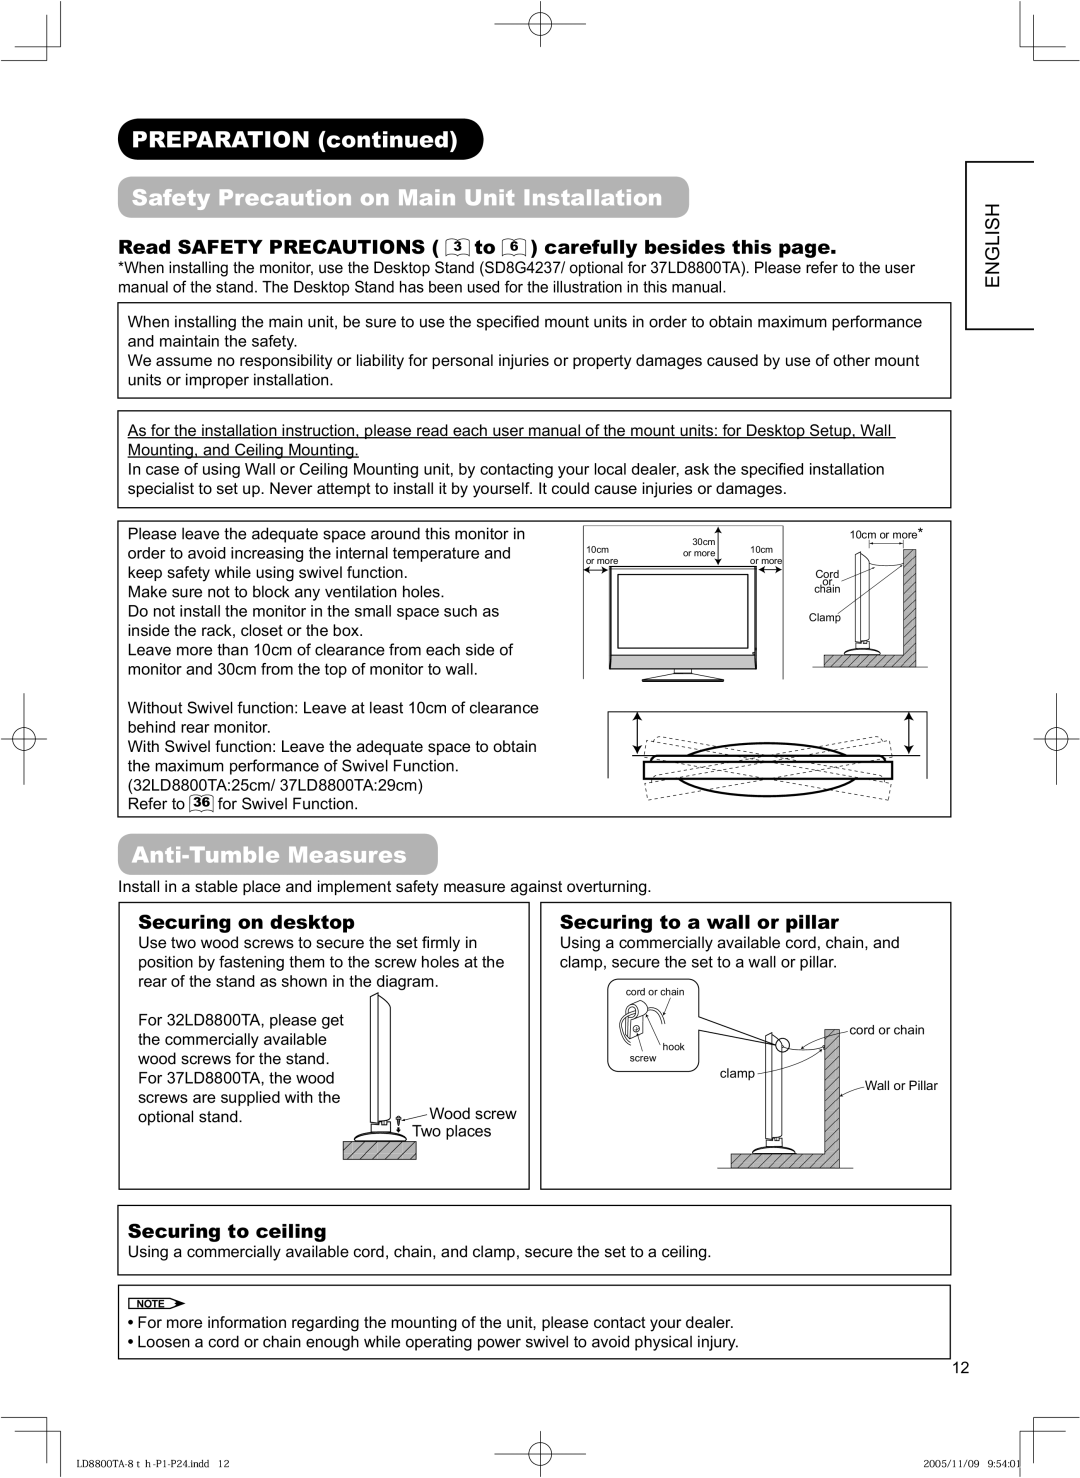 Hitachi 37LD8800TA PREPARATION continued Safety Precaution on Main Unit Installation, Anti-Tumble Measures, English 